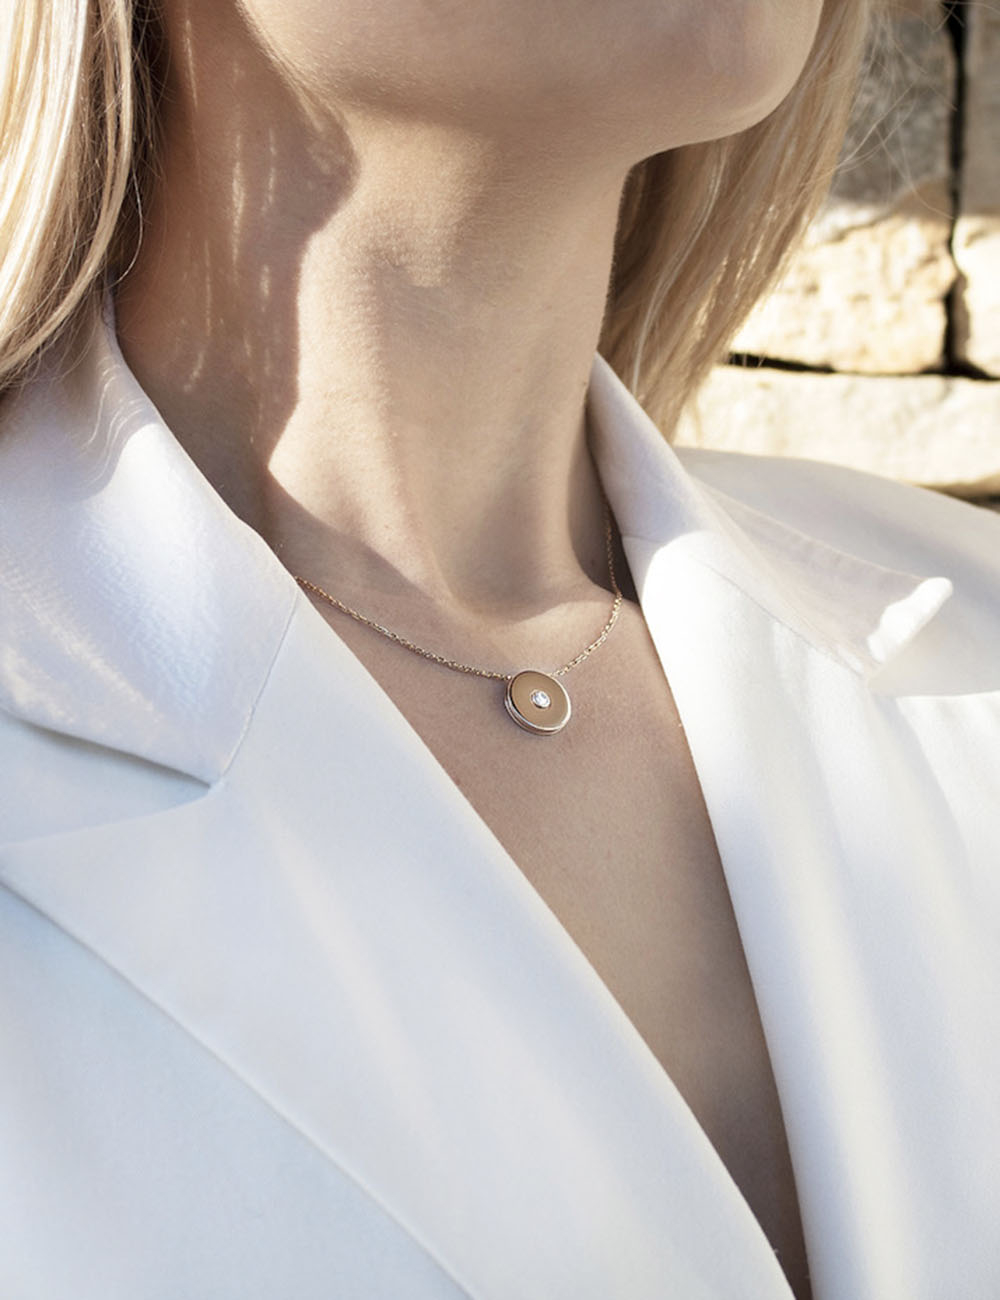 Unique Monade women's gold and diamond necklace - Refined Spiritual Elegance.